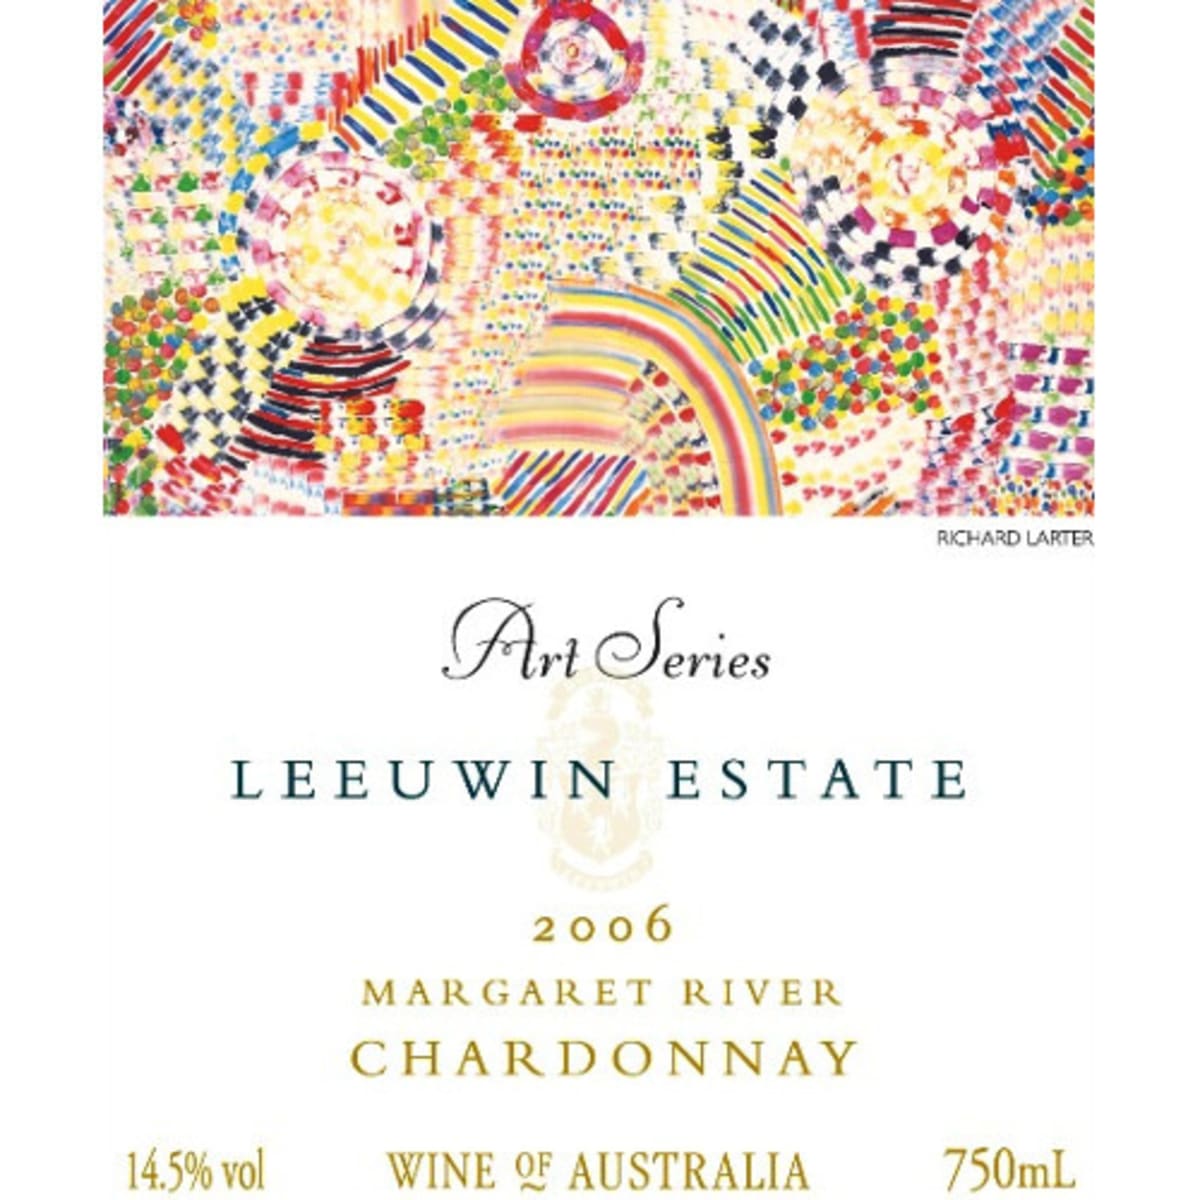 Leeuwin Estate Art Series Chardonnay 2006 Front Label